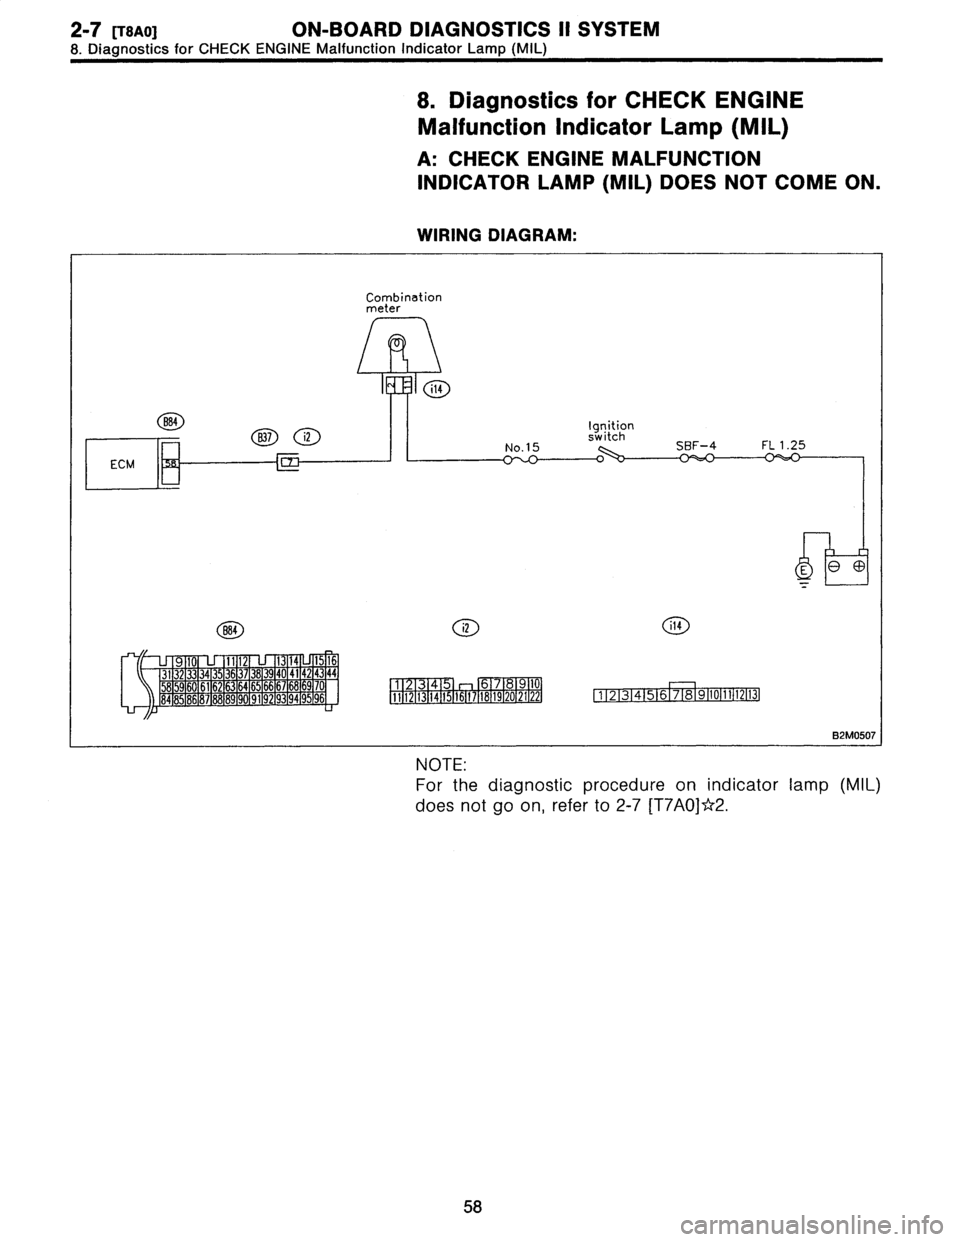 SUBARU LEGACY 1996  Service Repair Manual 2-7
[T8A0]
ON-BOARD
DIAGNOSTICS
II
SYSTEM

8
.
Diagnostics
for
CHECK
ENGINE
Malfunction
Indicator
Lamp
(MIL)
8
.
Diagnostics
for
CHECK
ENGINE

Malfunction
Indicator
Lamp
(MIL)

A
:
CHECK
ENGINE
MALFUN